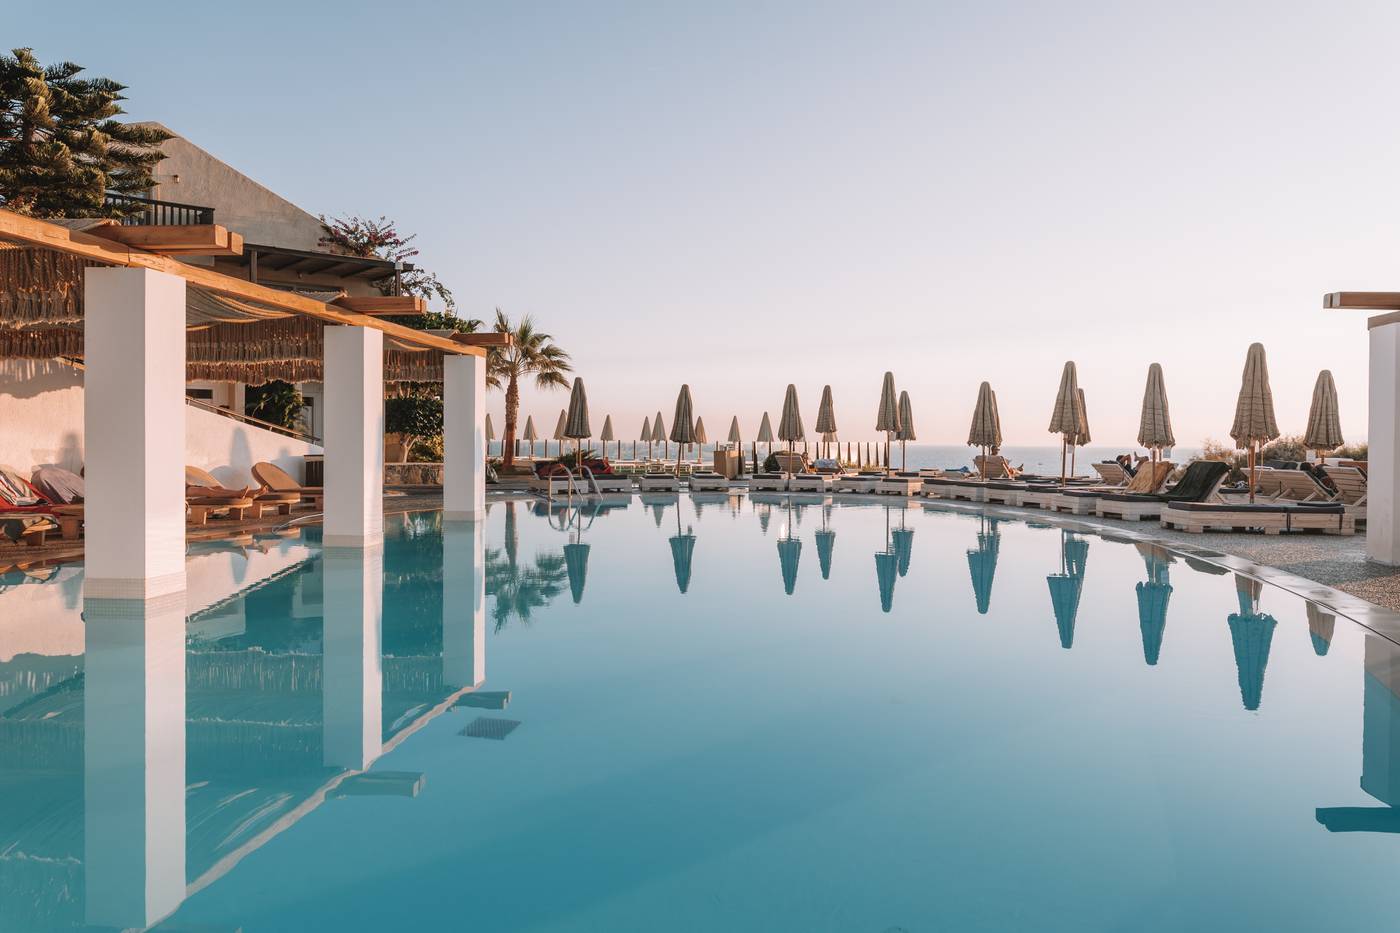 Sea Side Resort & Spa in Crete, Tenerife, Greece